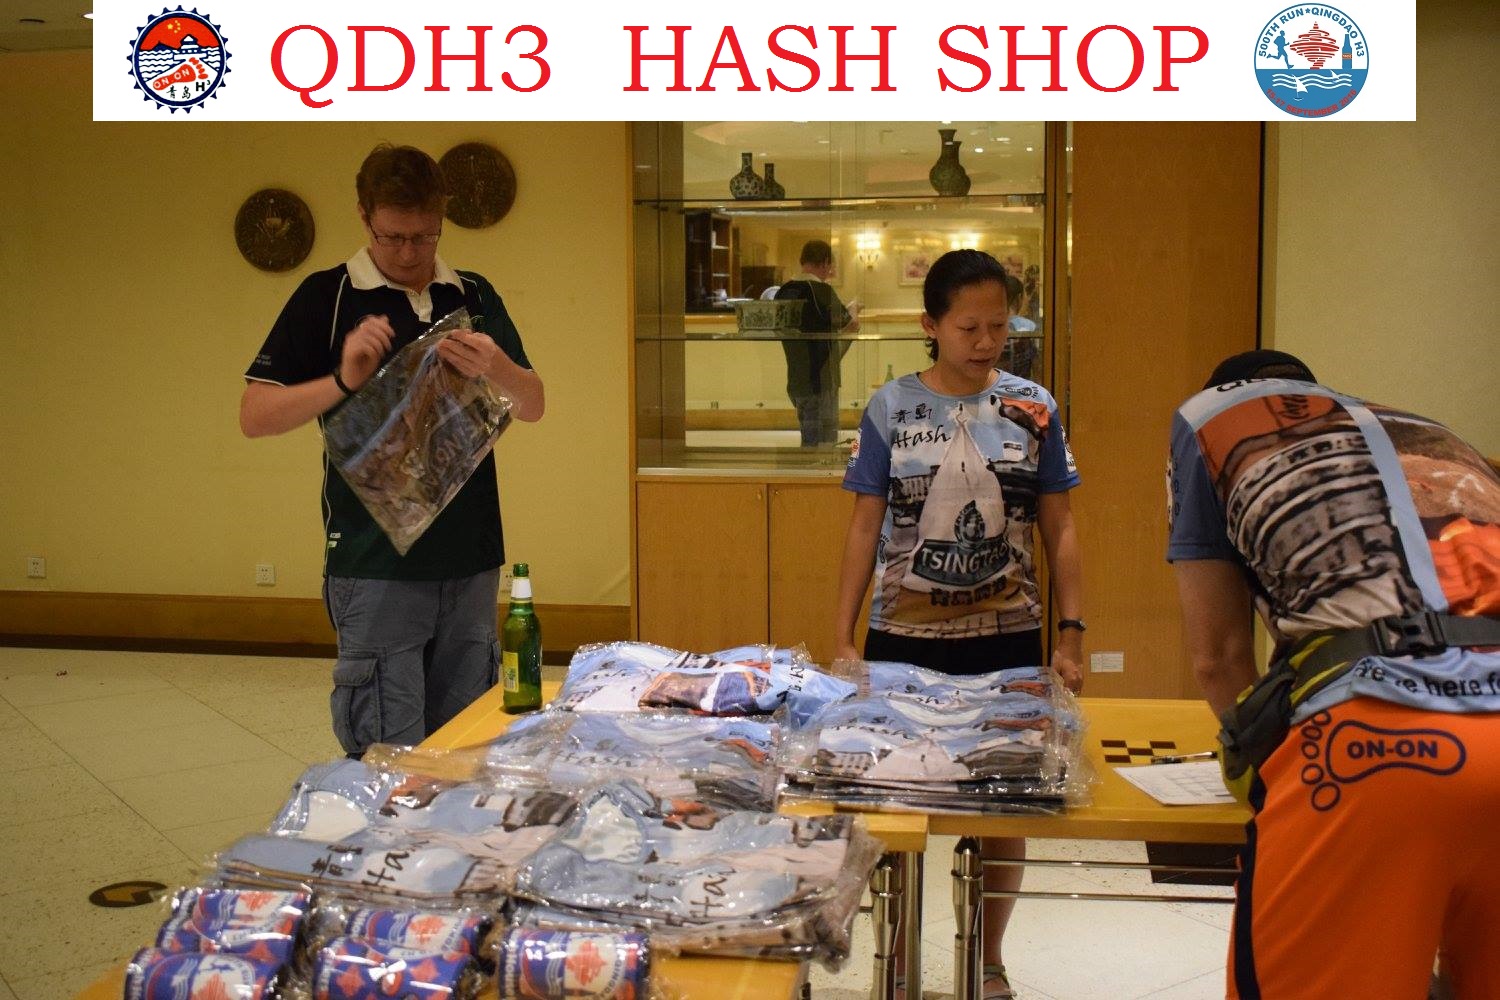 The QDH3 Hash Shop